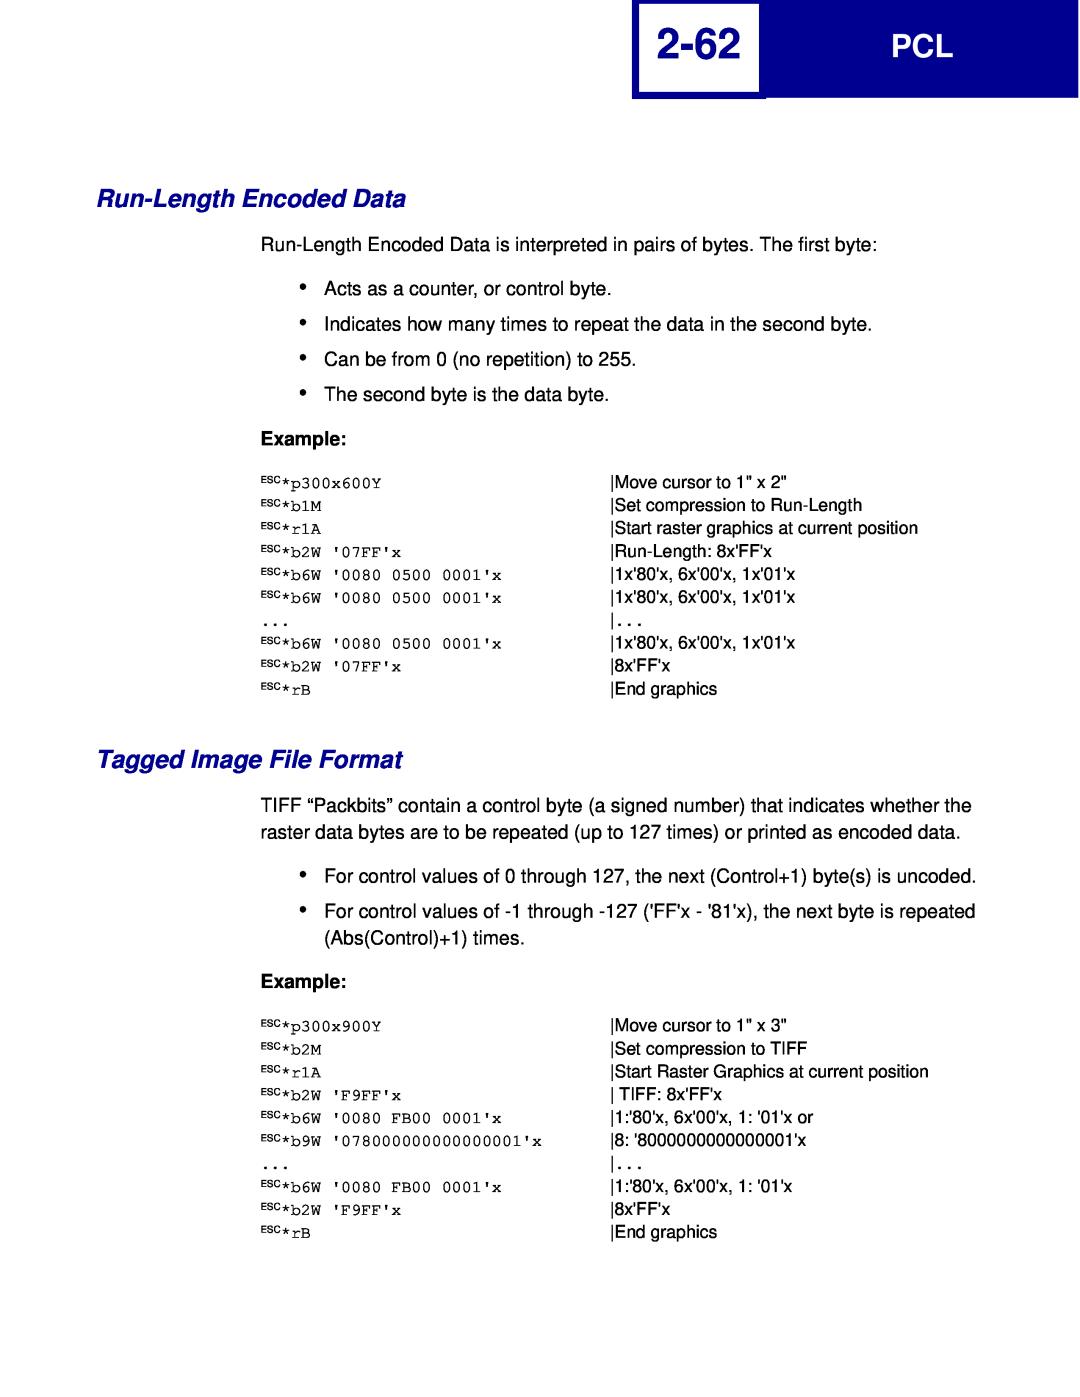 Lexmark C760, C762 manual 2-62, Run-Length Encoded Data, Tagged Image File Format, Example 